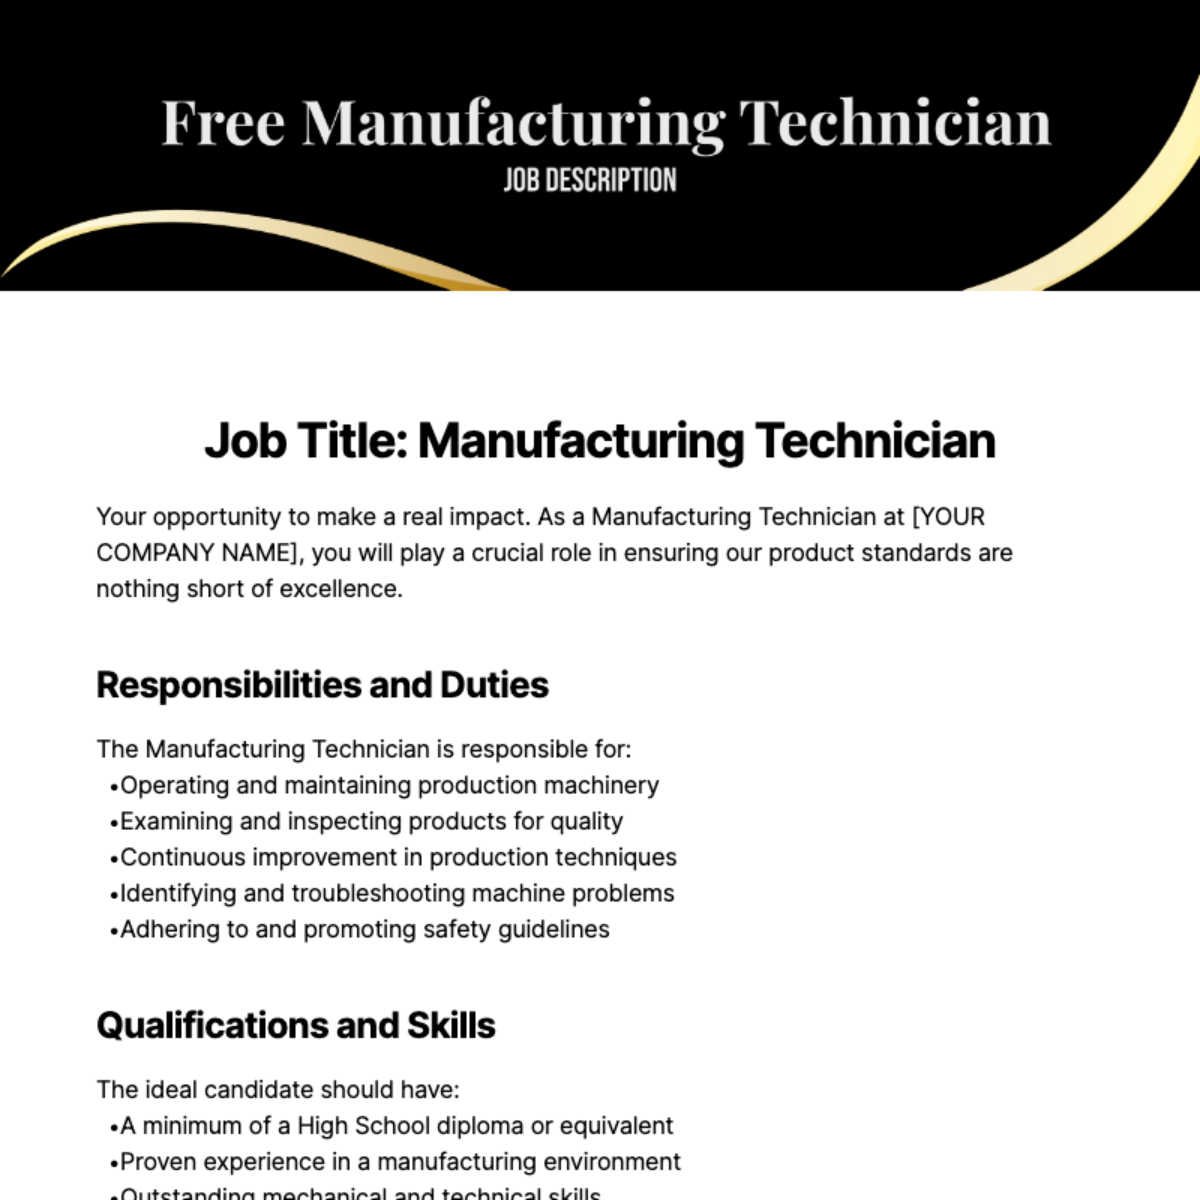 Free Manufacturing Technician Job Description Template